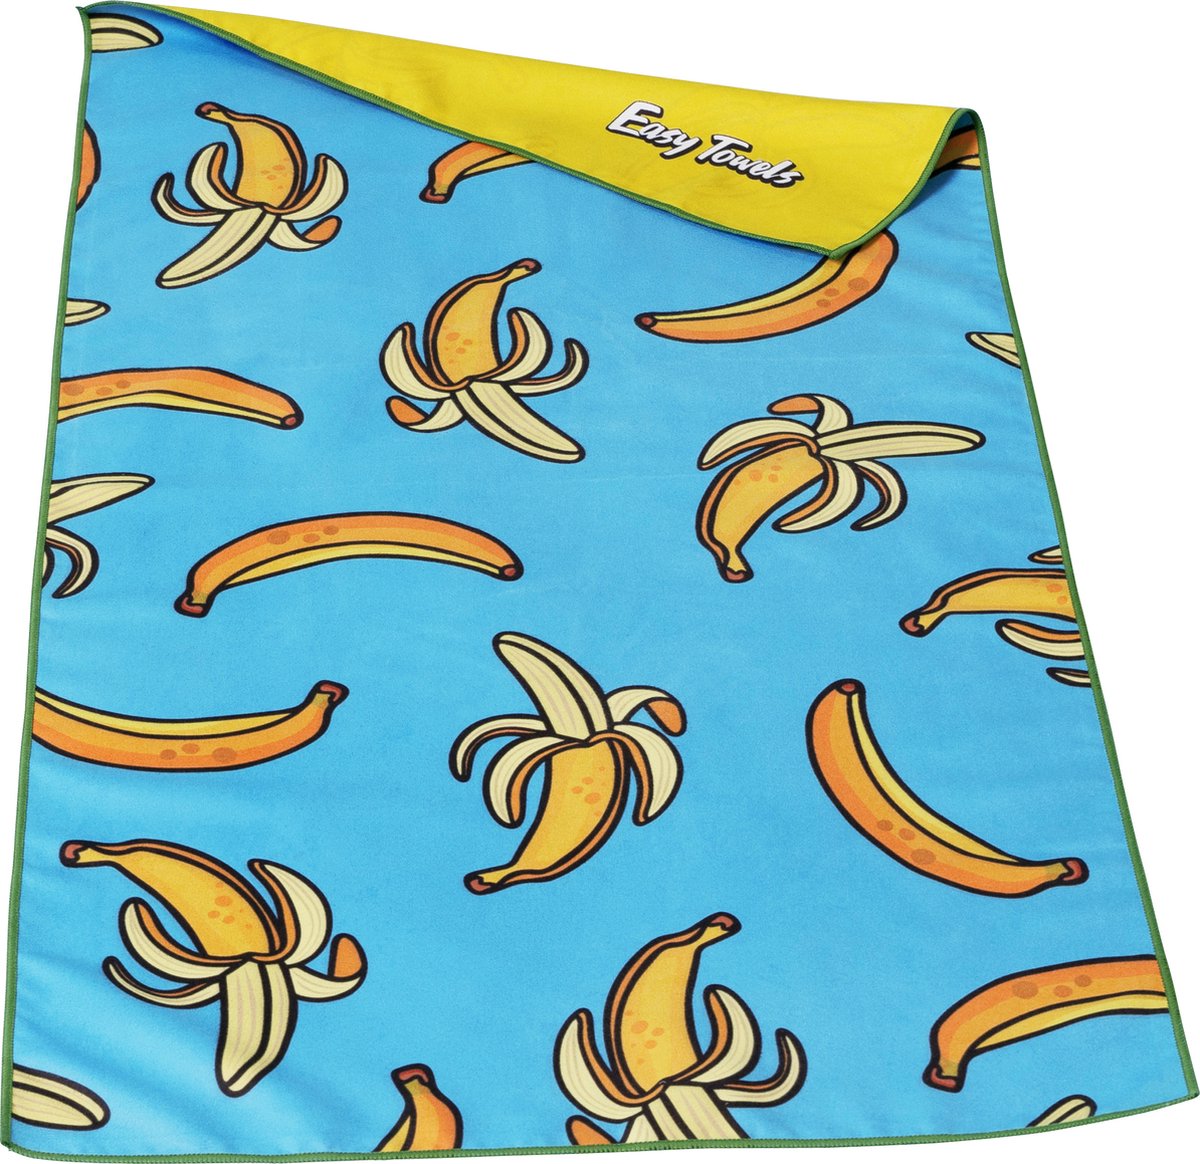 Easy Towels - Sporthanddoek Fitness - Microvezel - Banaan Print